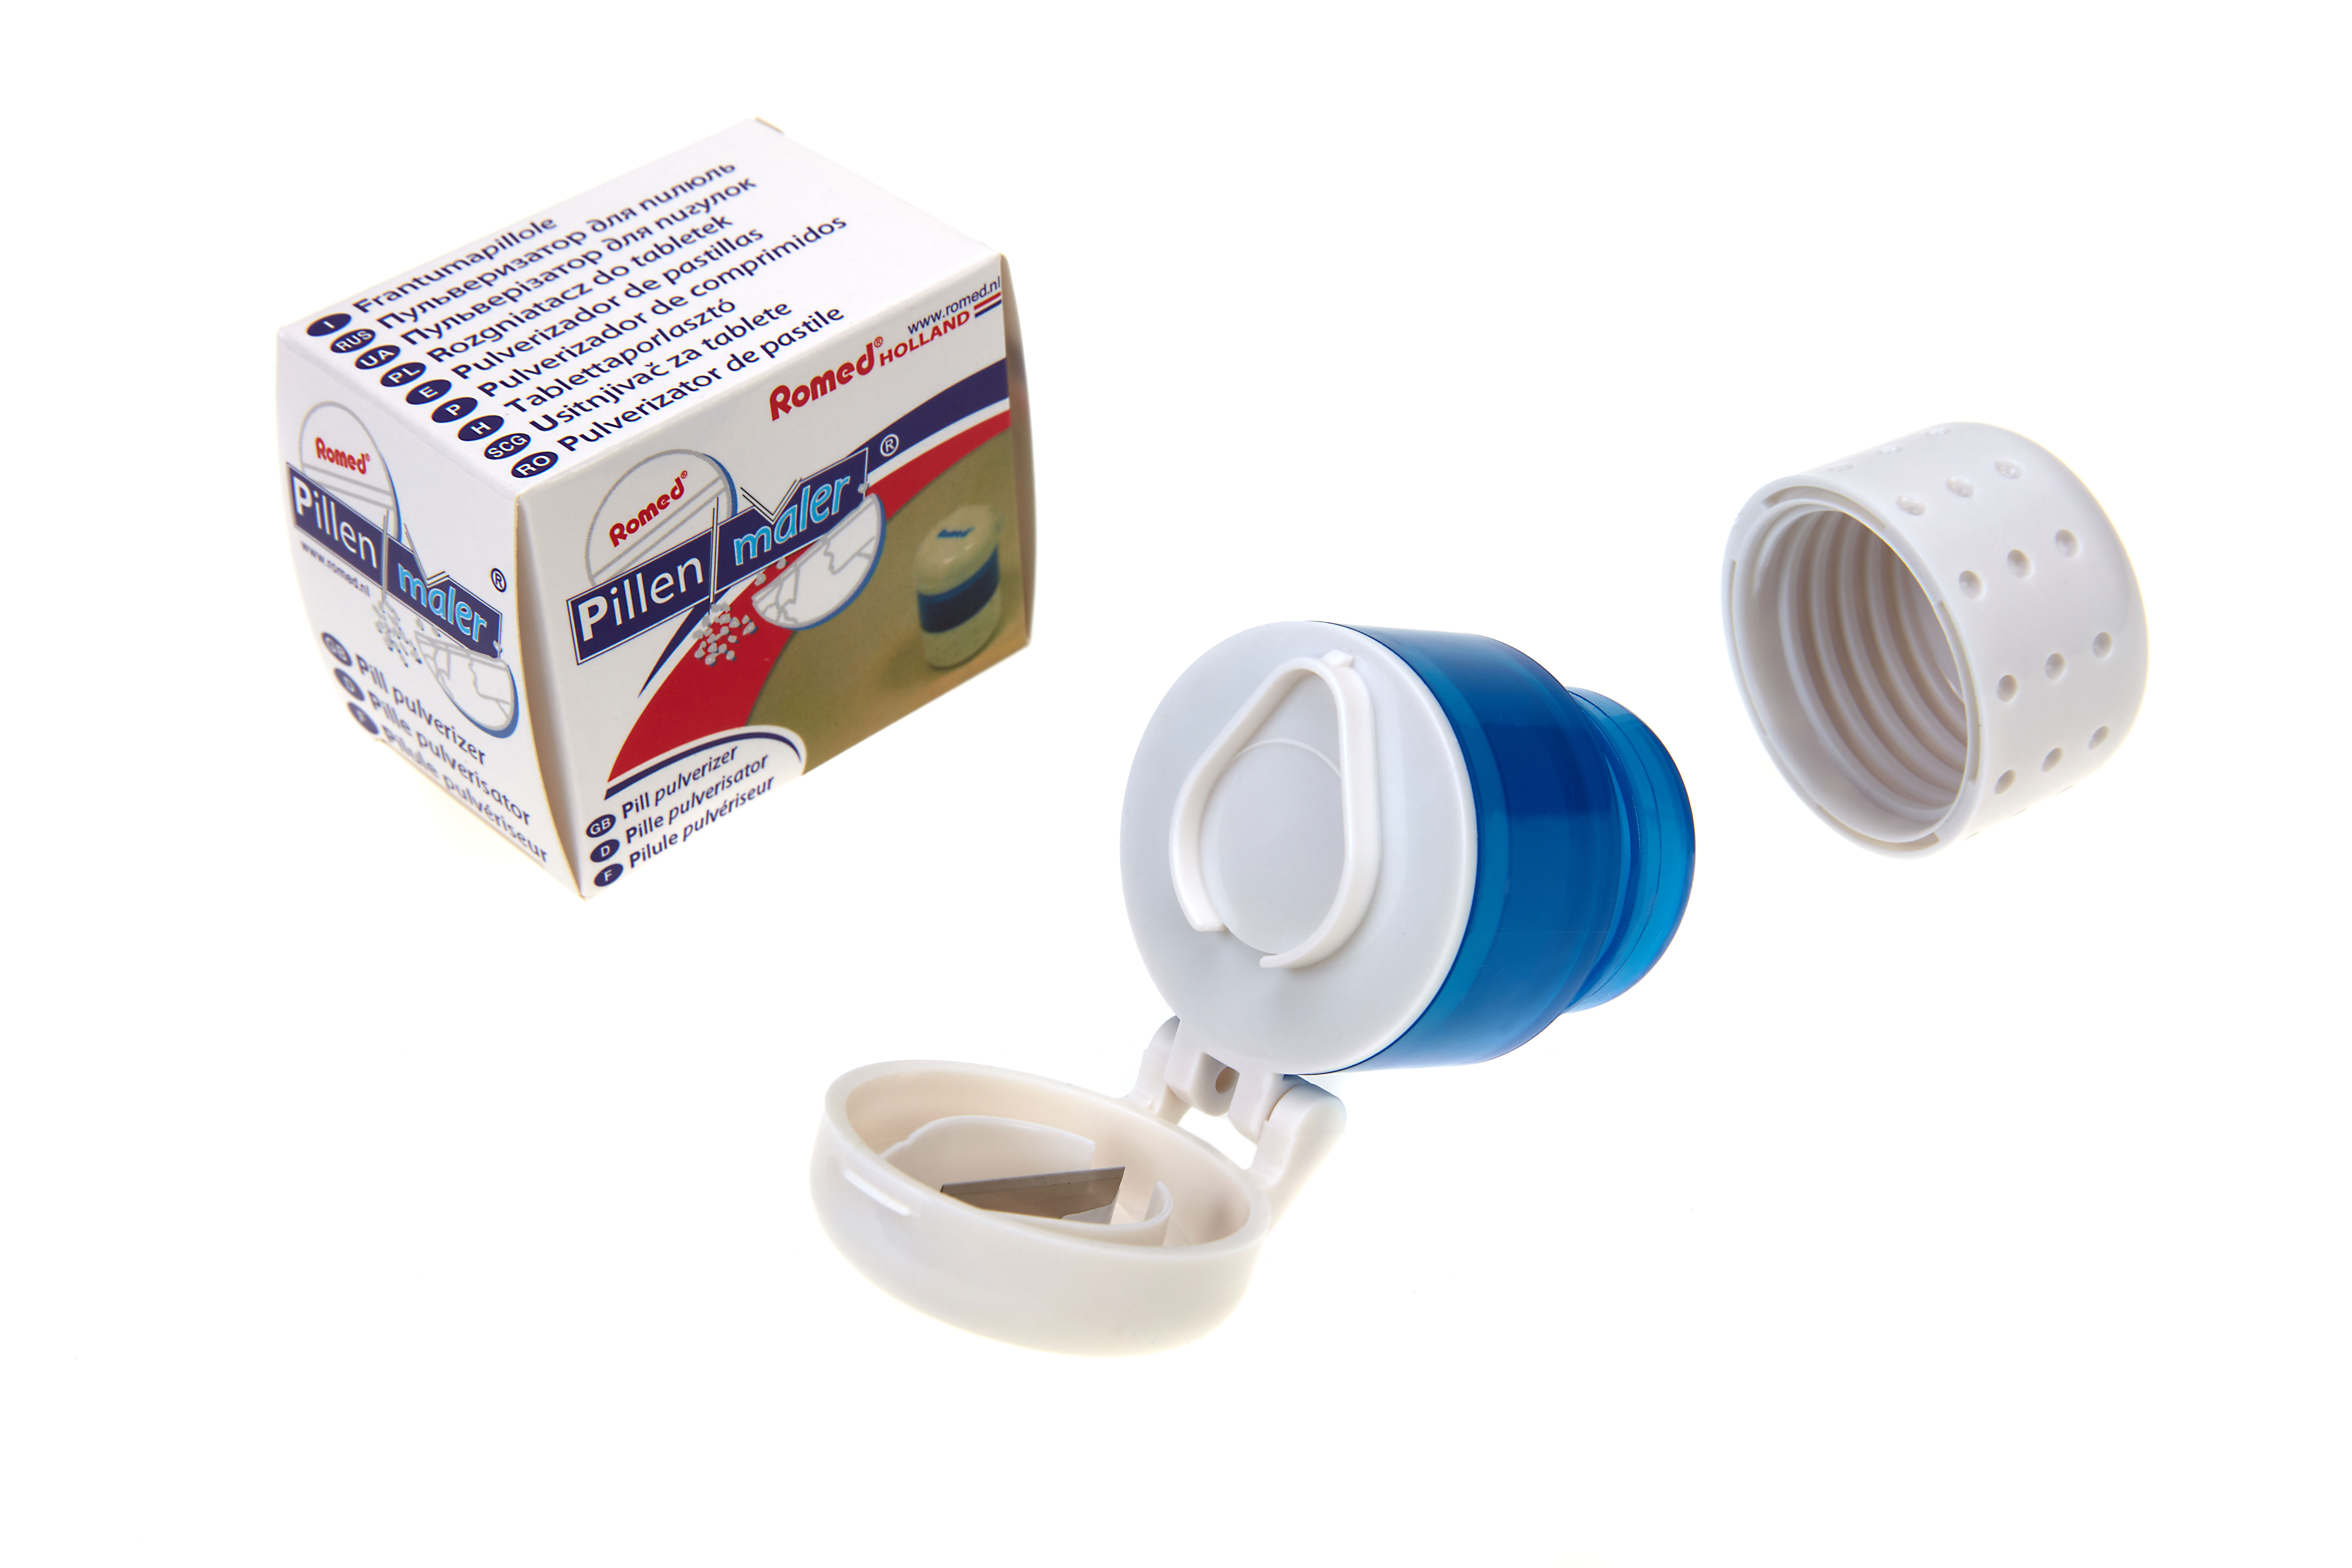 PP-400 Romed pill pulverizers, per piece, 20 pcs in an inner box, 20 x 20 pcs = 400 pcs in a carton.